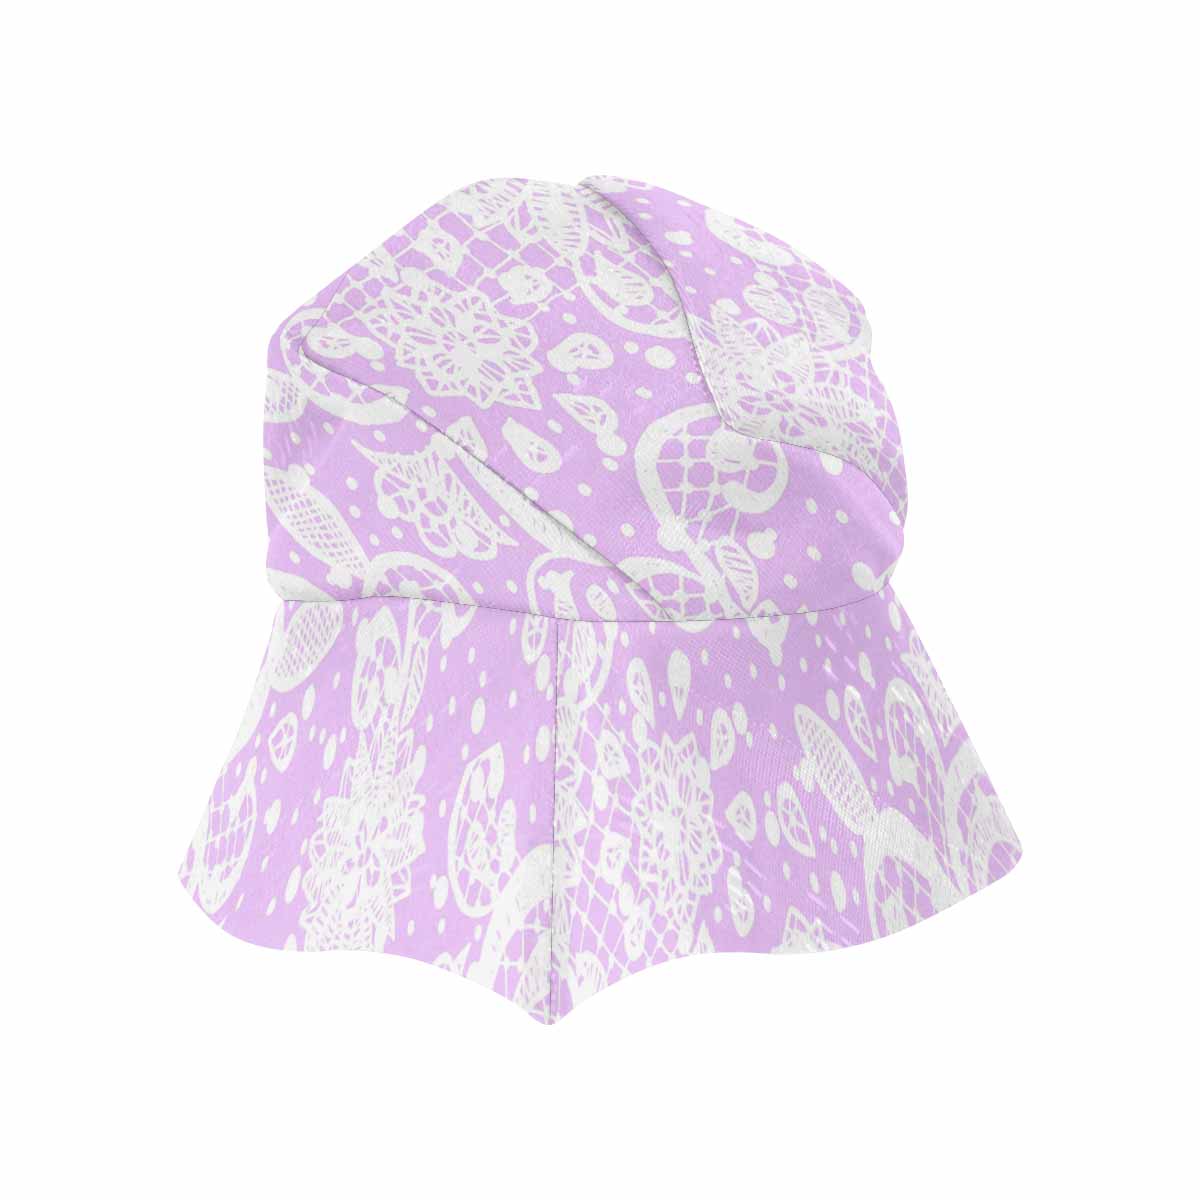 Victorian lace print, wide brim sunvisor Hat, outdoors hat, design 06